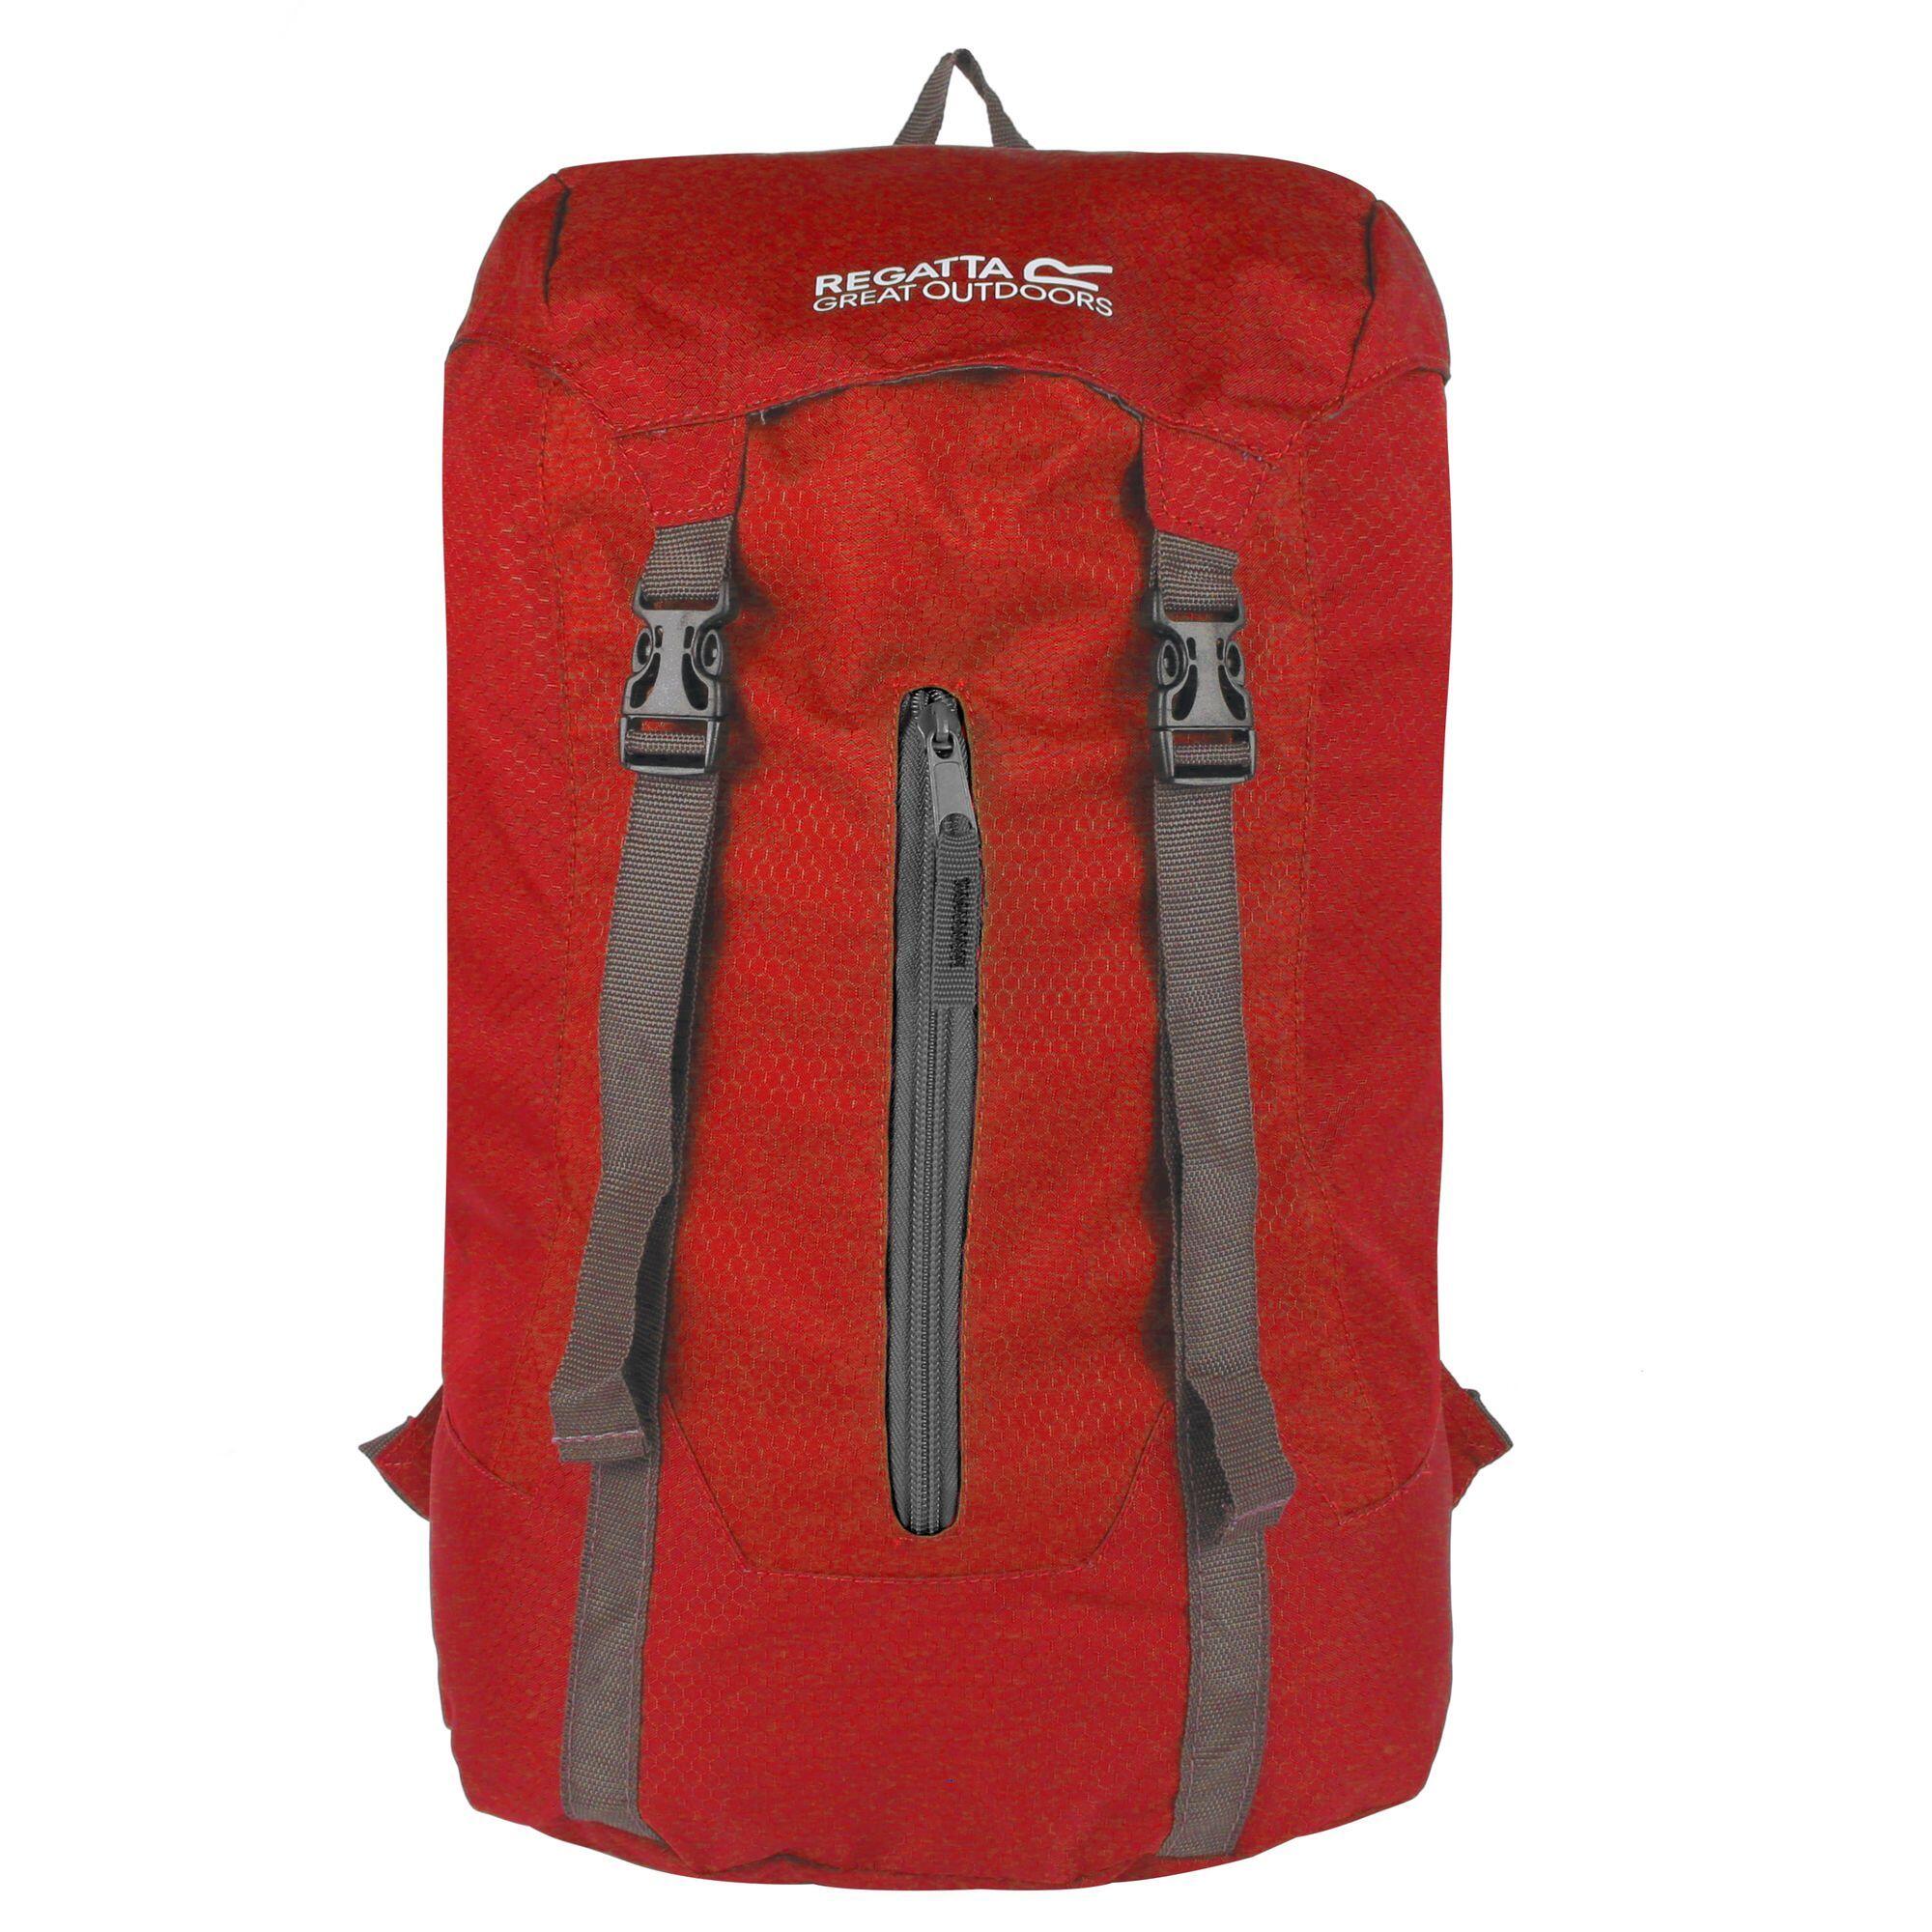 REGATTA Great Outdoors Easypack Packaway Rucksack/Backpack (25 Litres) (Pepper)